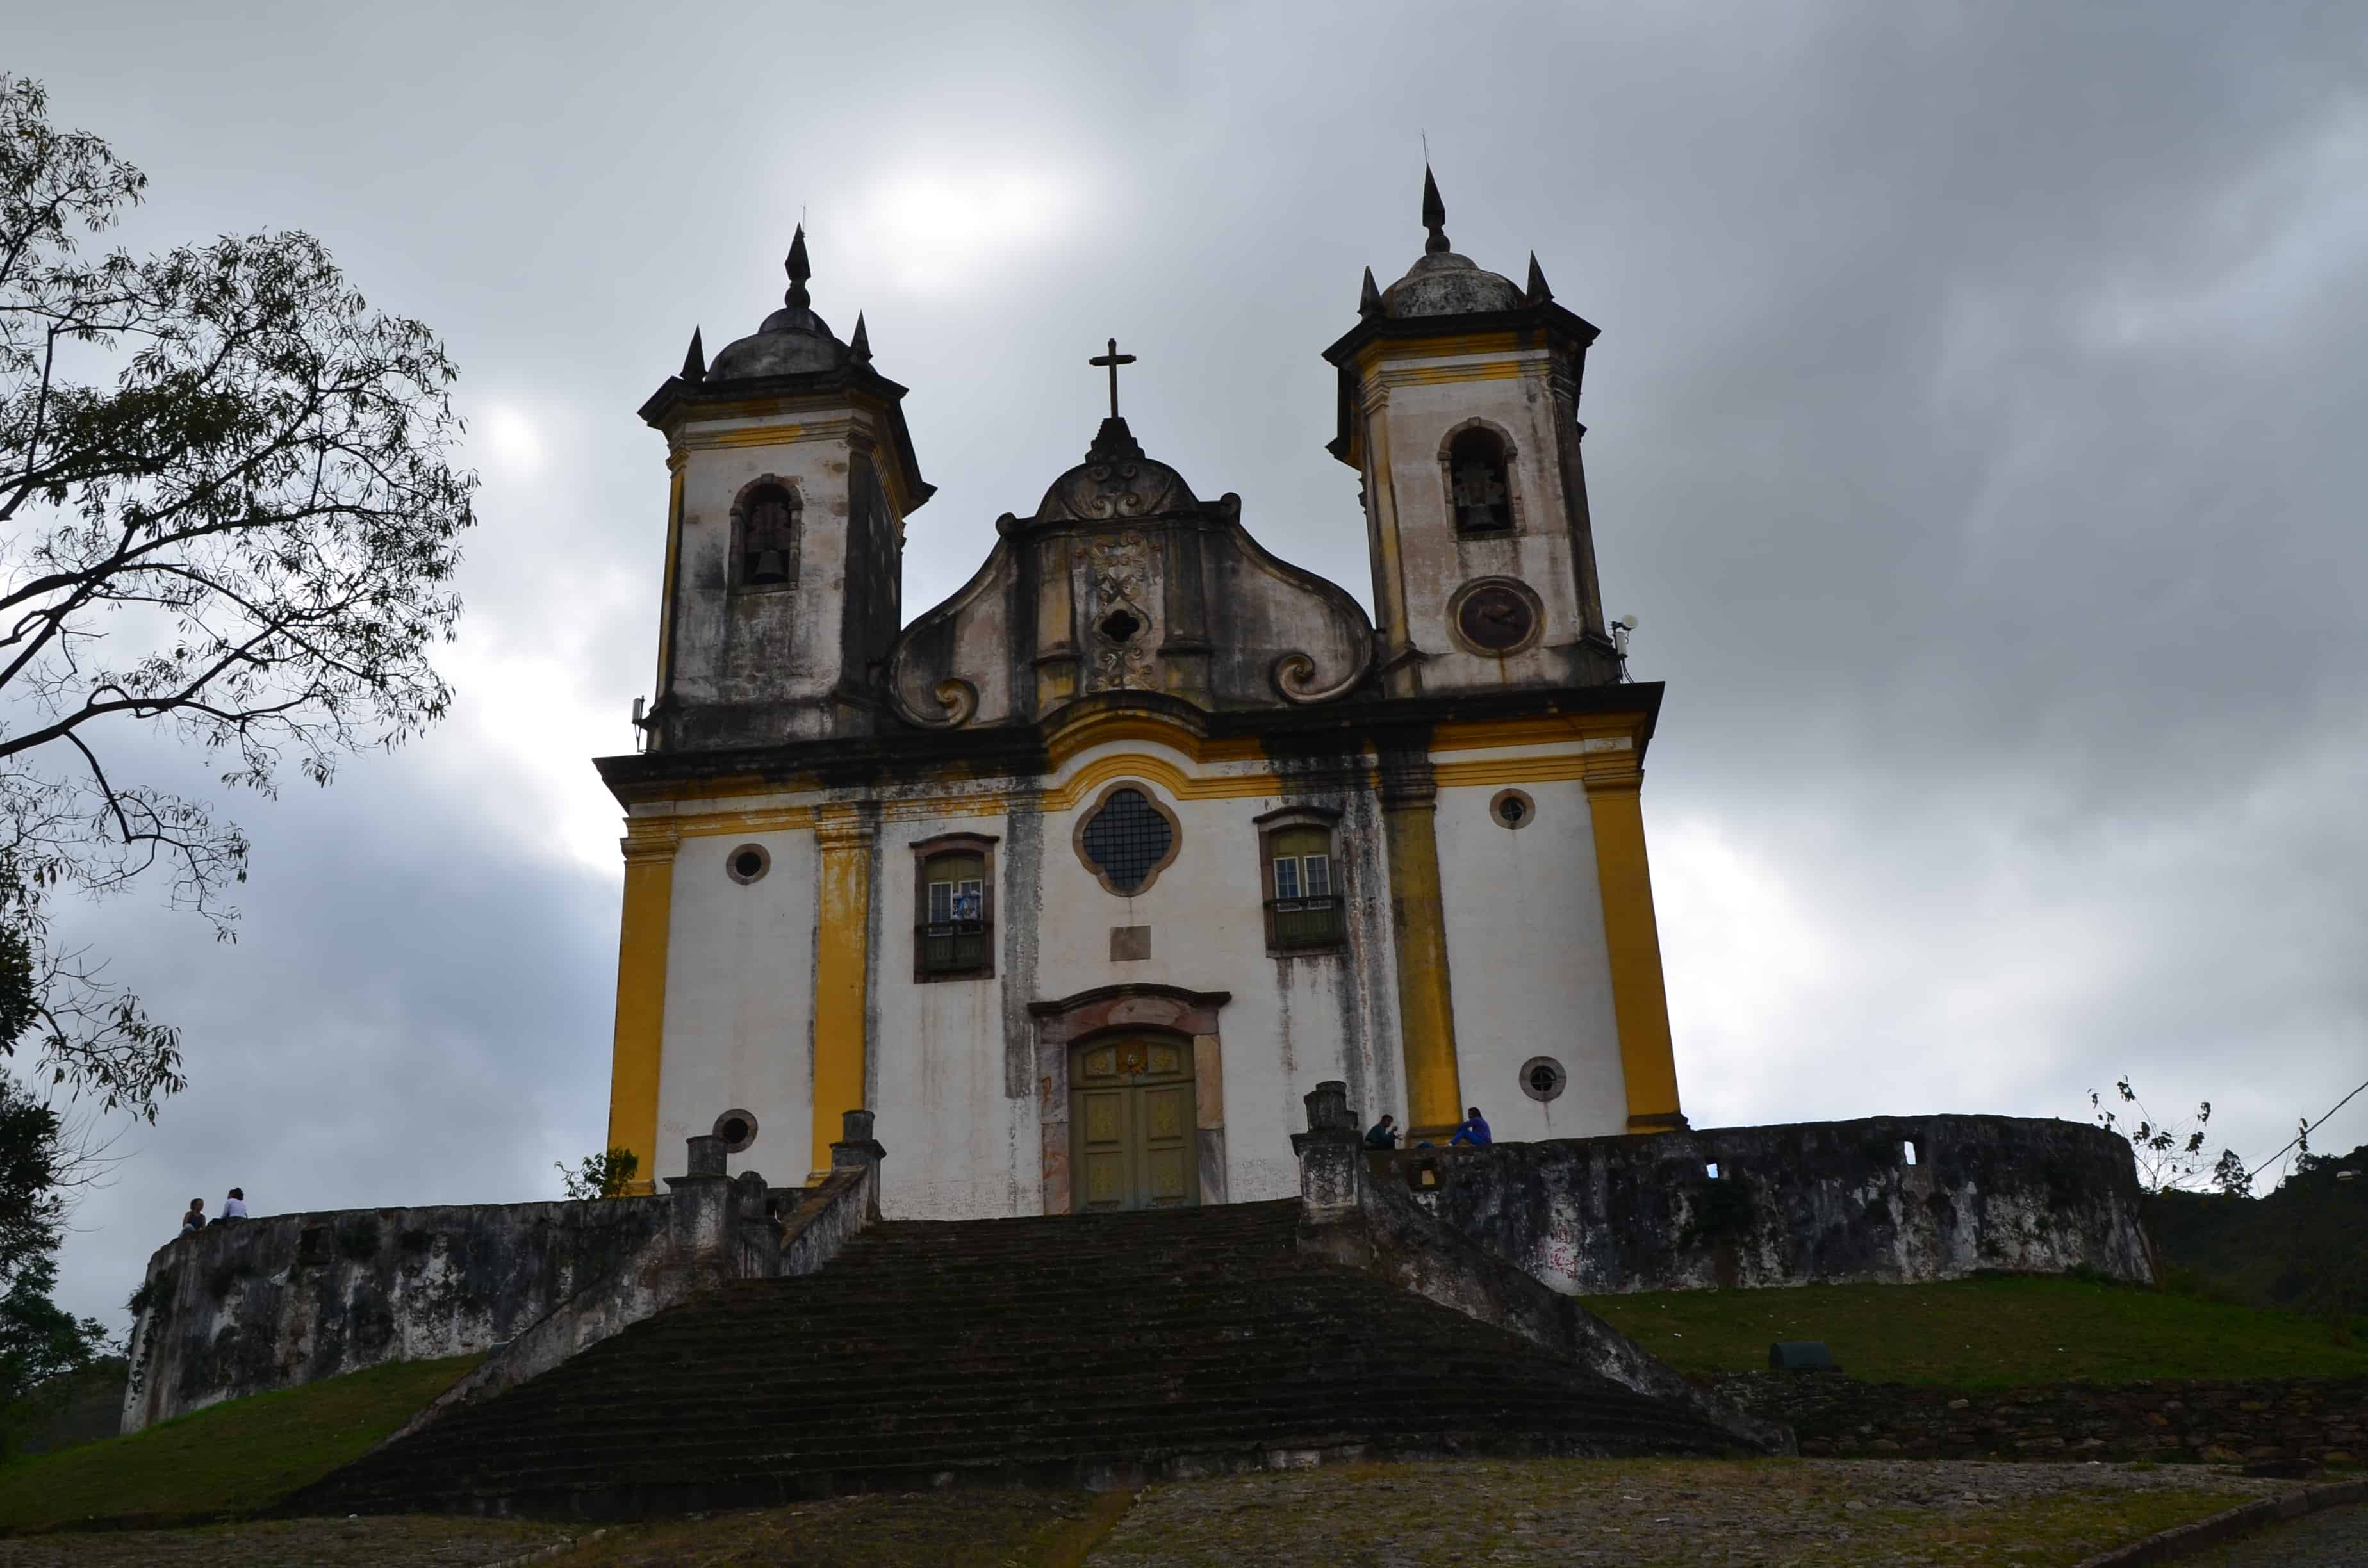 São Francisco de Paula in Ouro Preto, Brazil